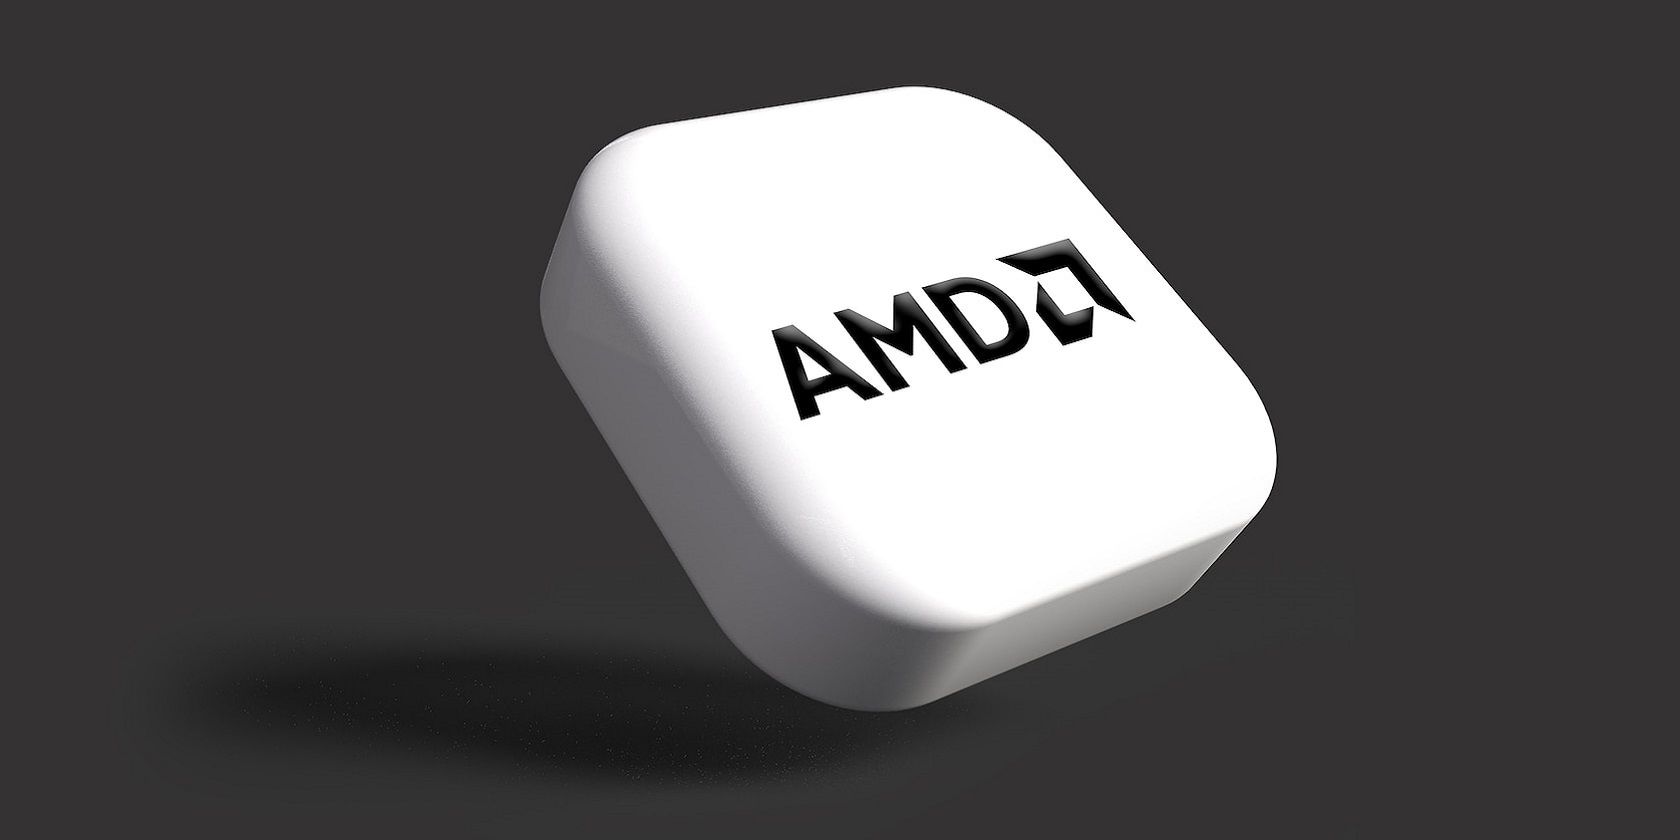 The AMD logo 